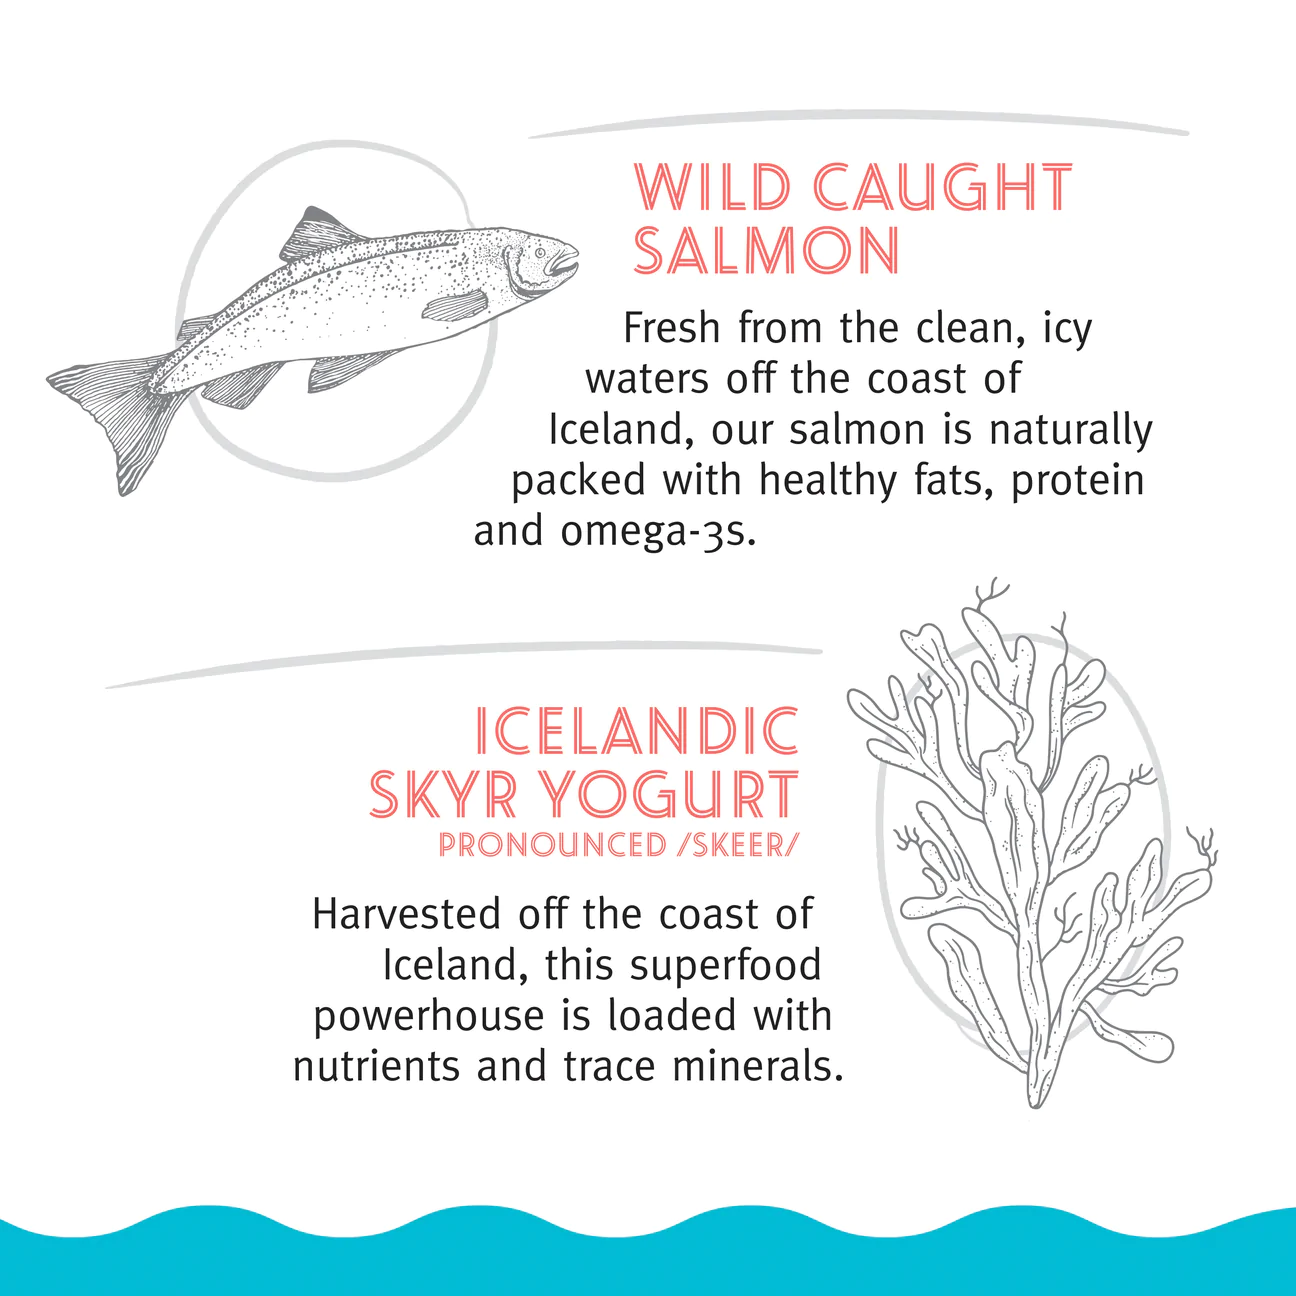 Icelandic Cat Soft Chew Salmon & Seaweed Nibblets 2.25oz